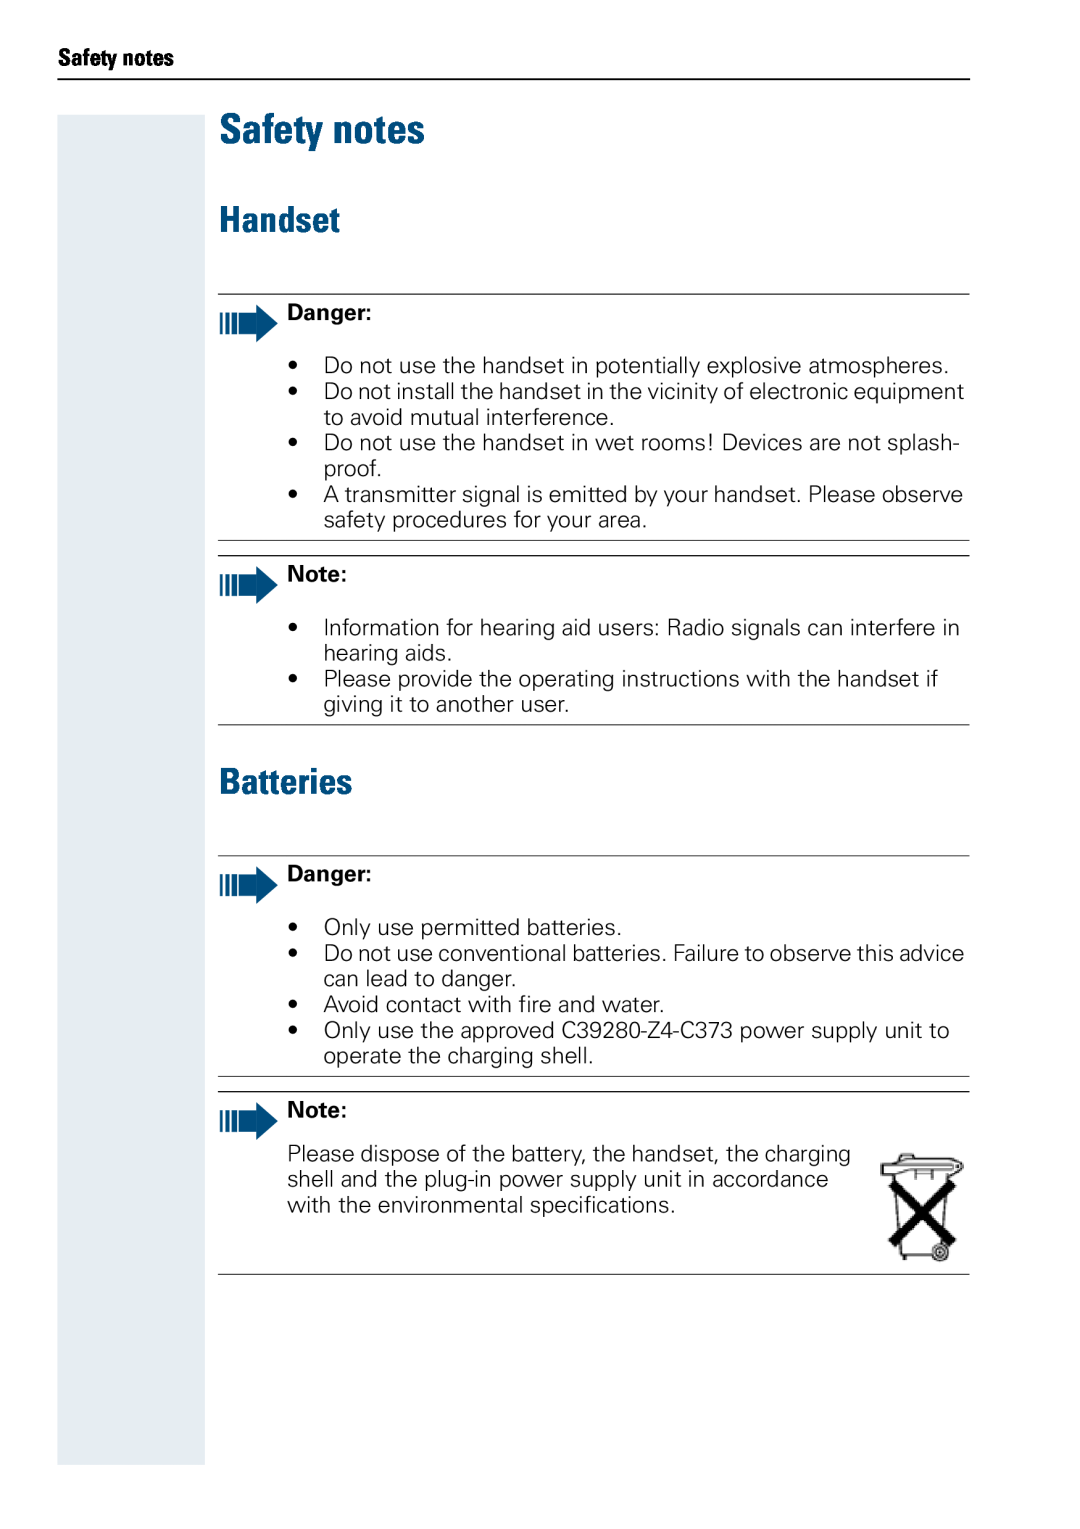 Siemens 500 manual Safety notes, Handset, Batteries, Danger 